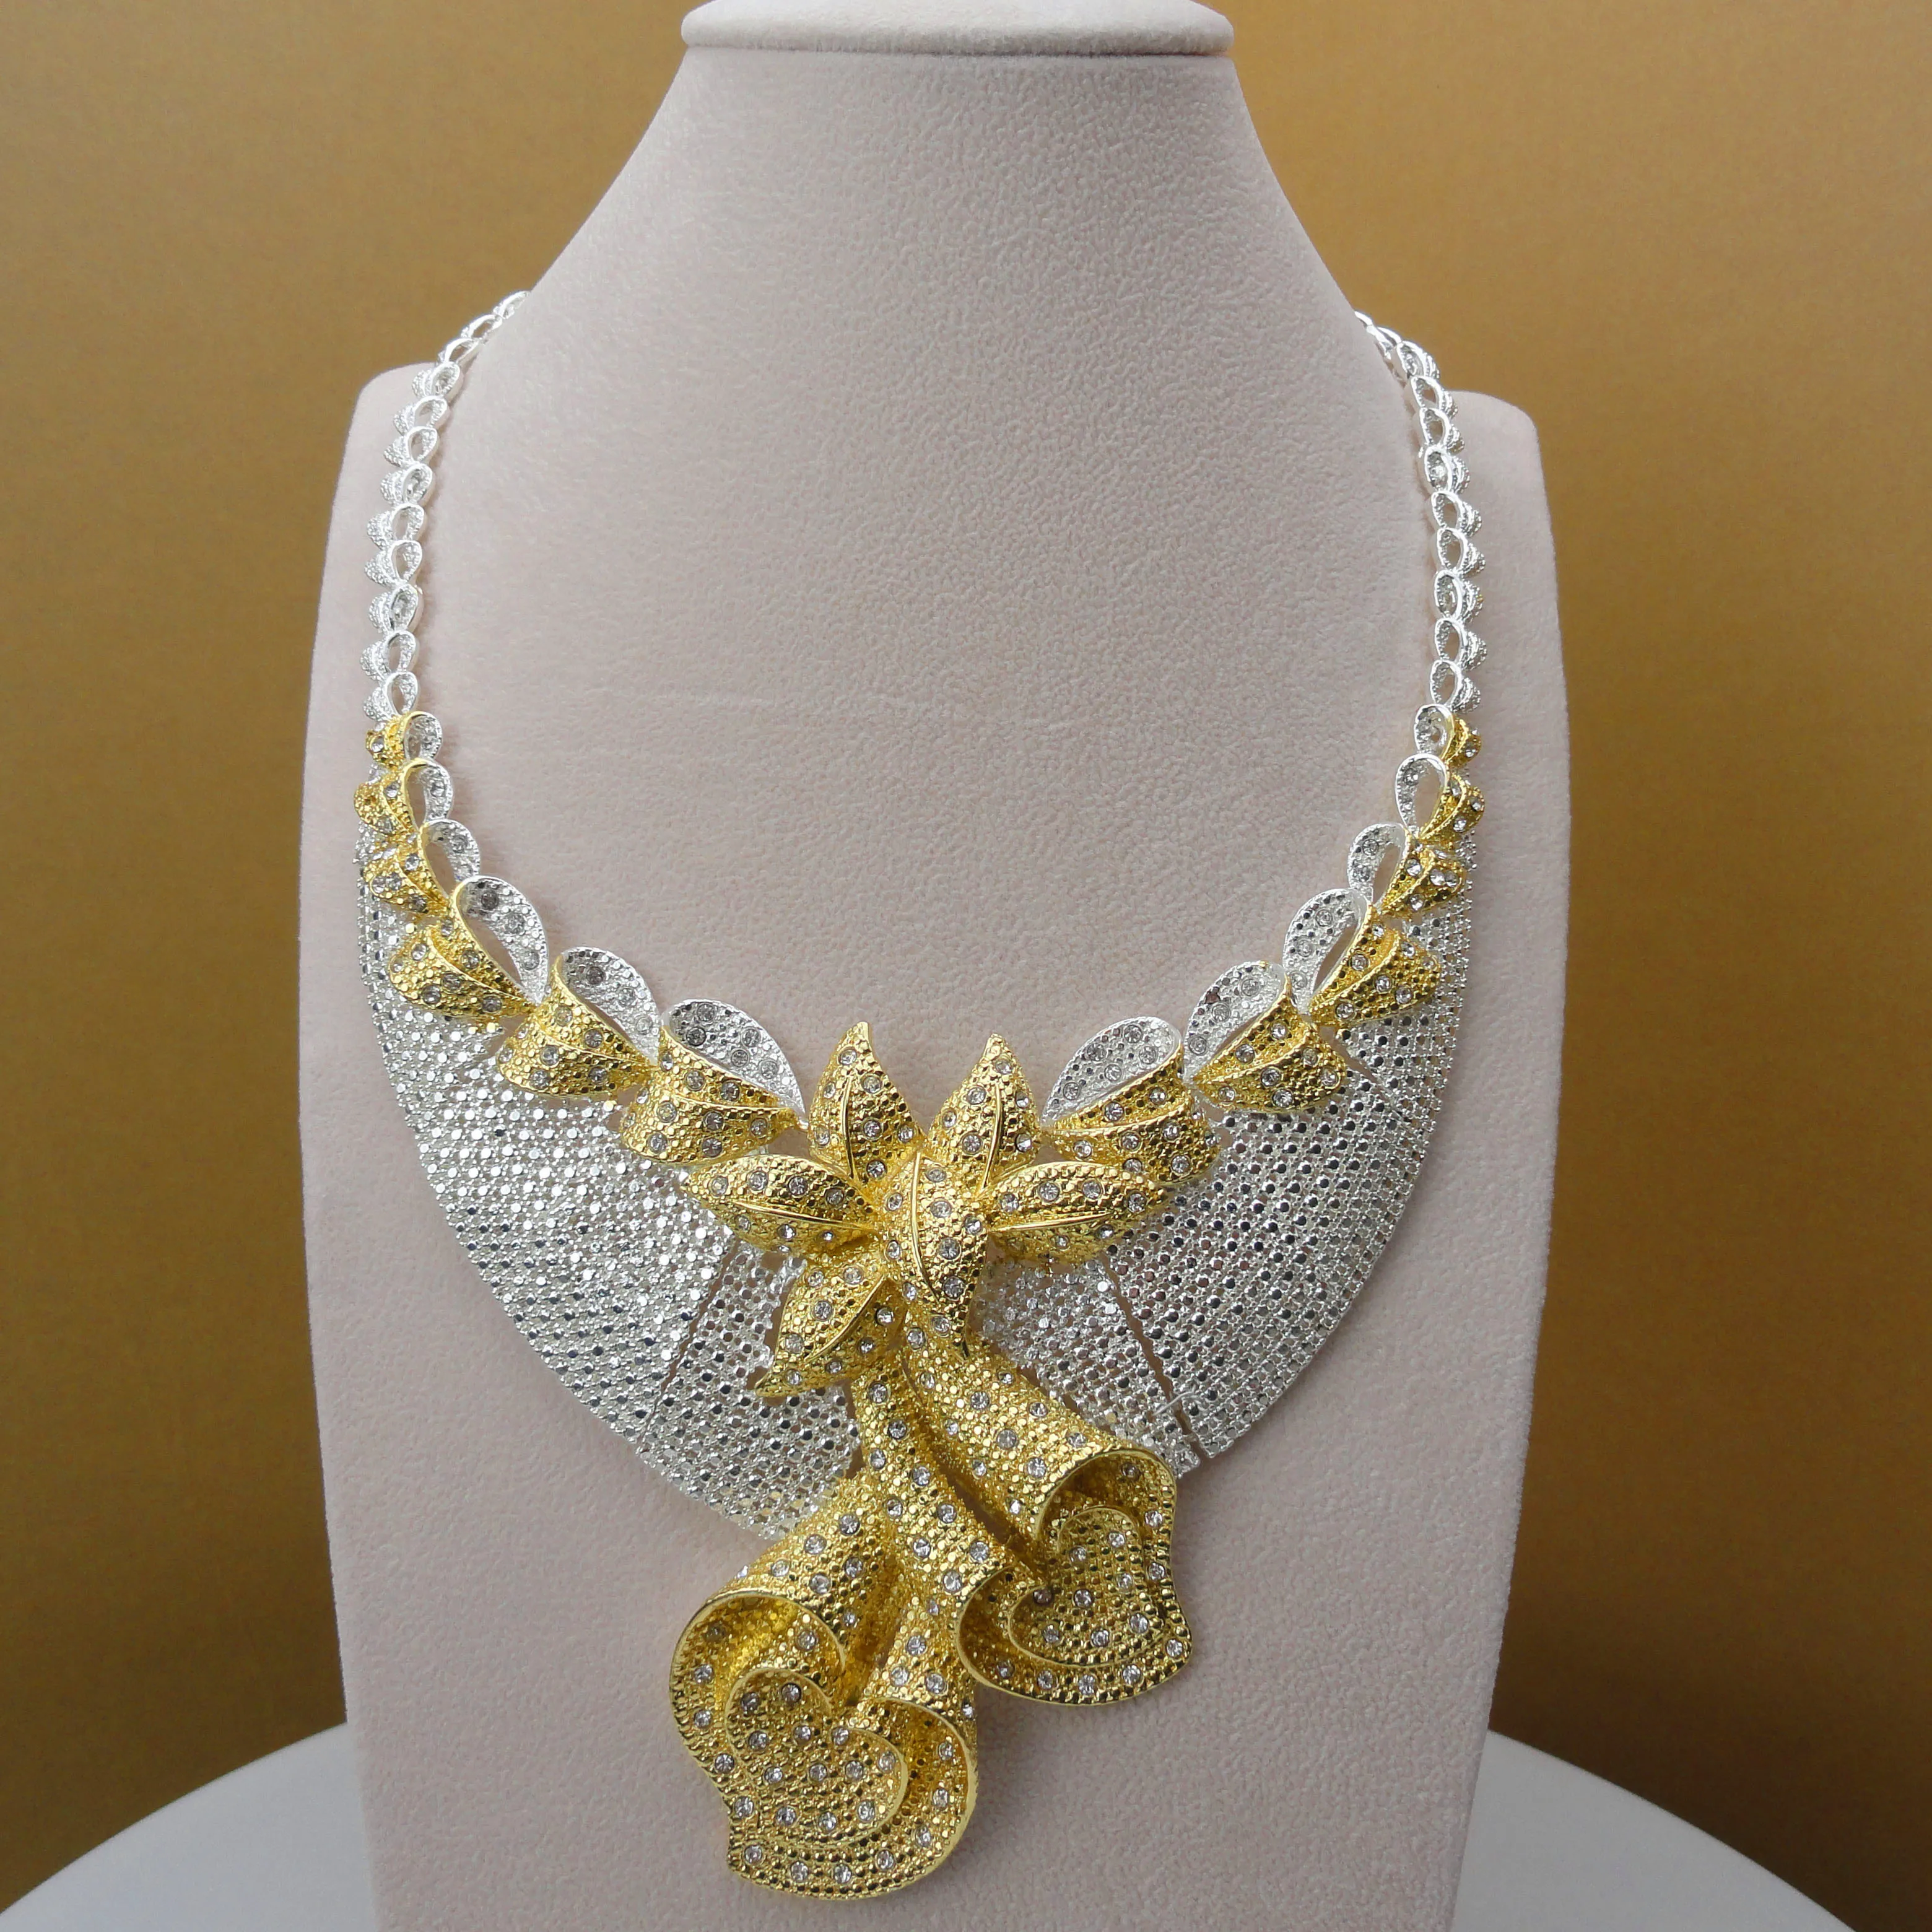 2019 yuminglai 迪拜女士服装珠宝非洲花式珠宝套装项链 fhk5679